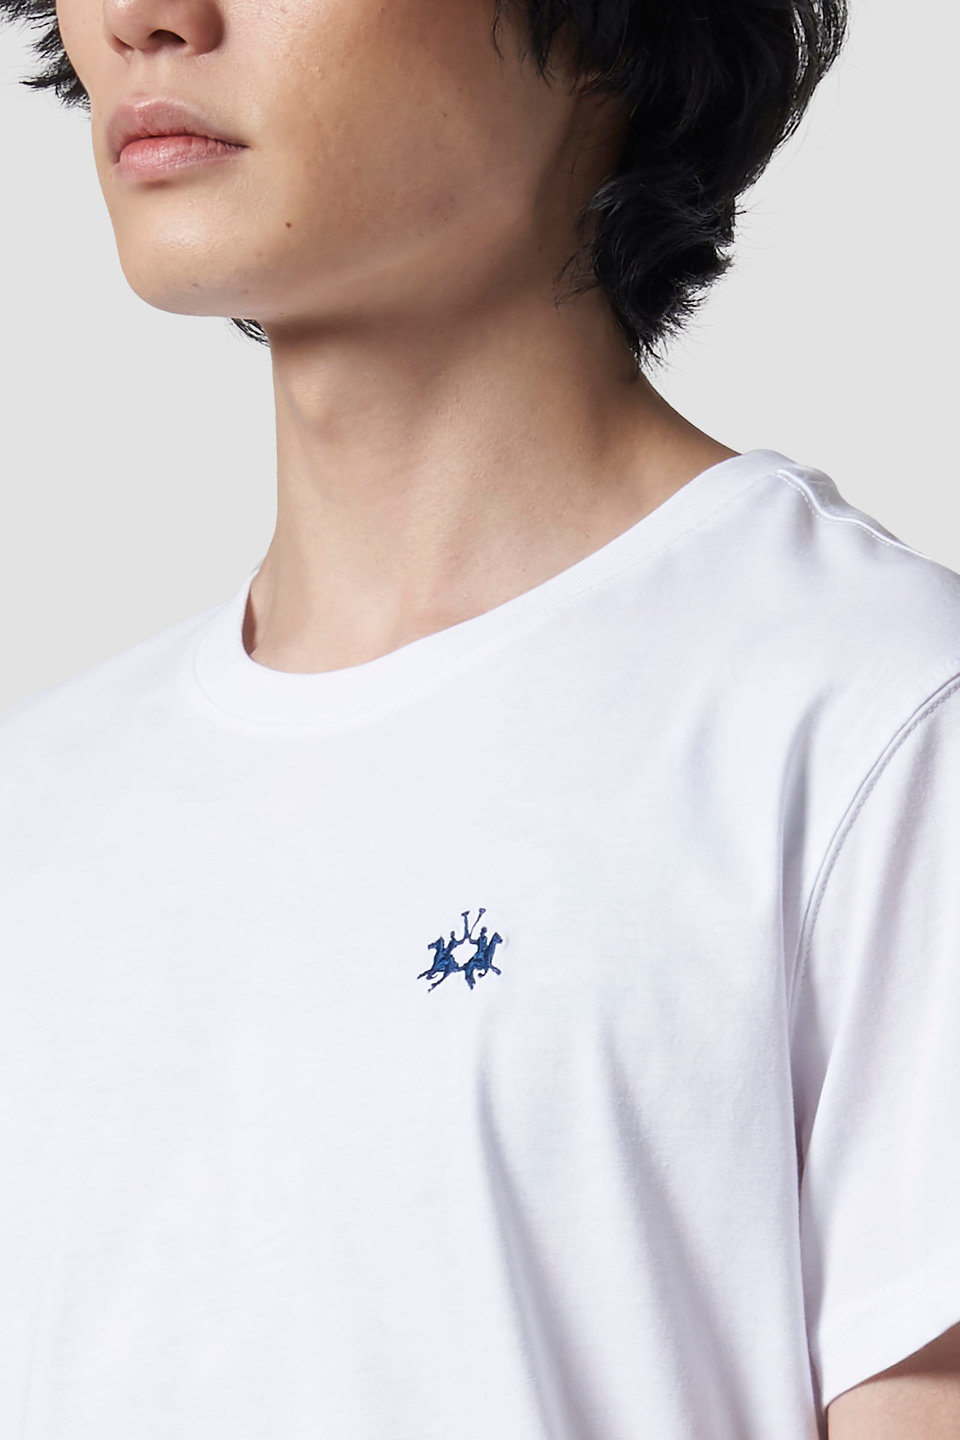 Men's T-shirts in a regular fit - Serge | La Martina - Official Online Shop